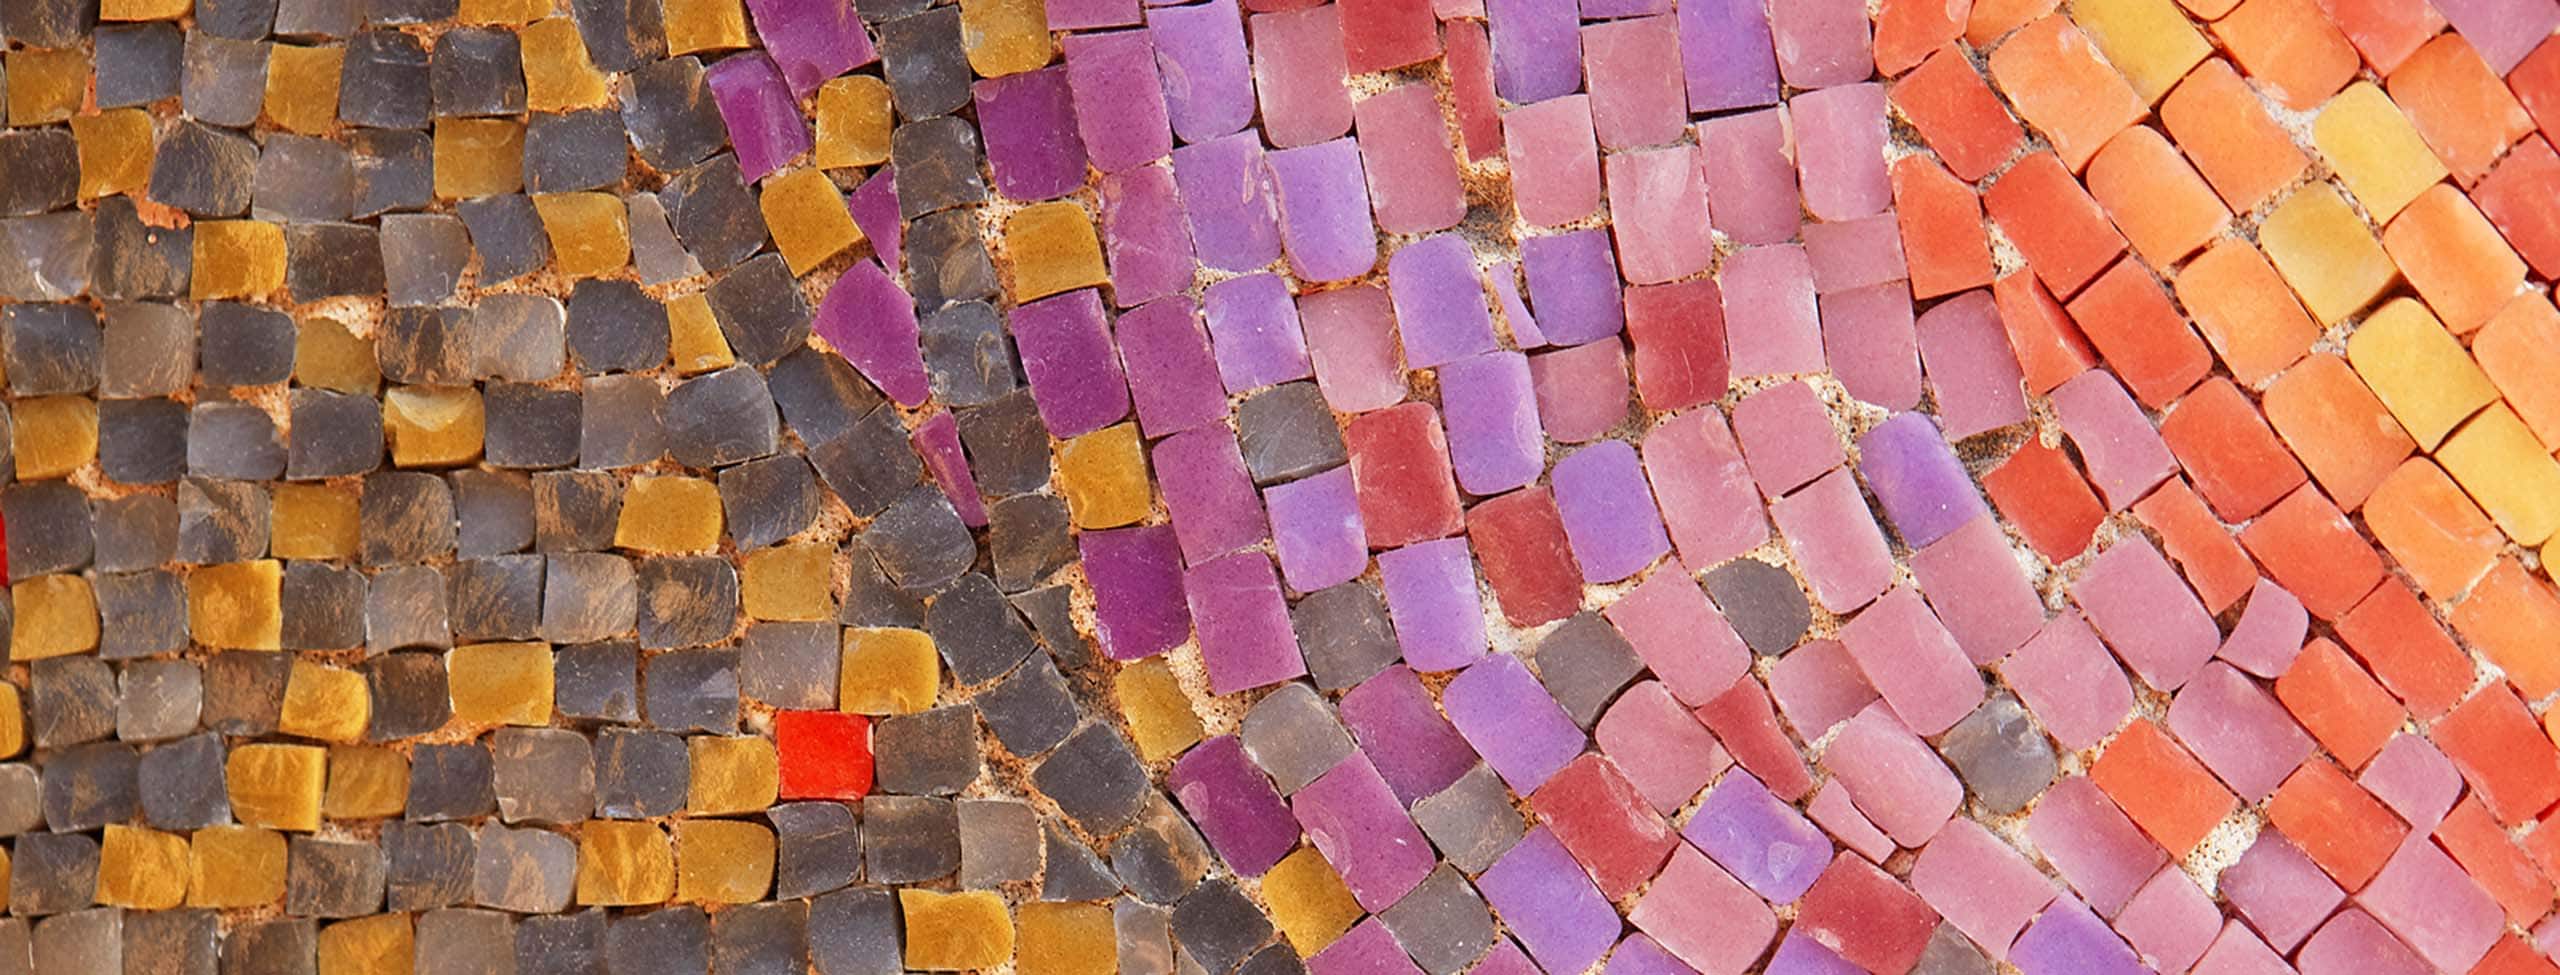 red, yellow, orange, purple, and gray mosaic tiles